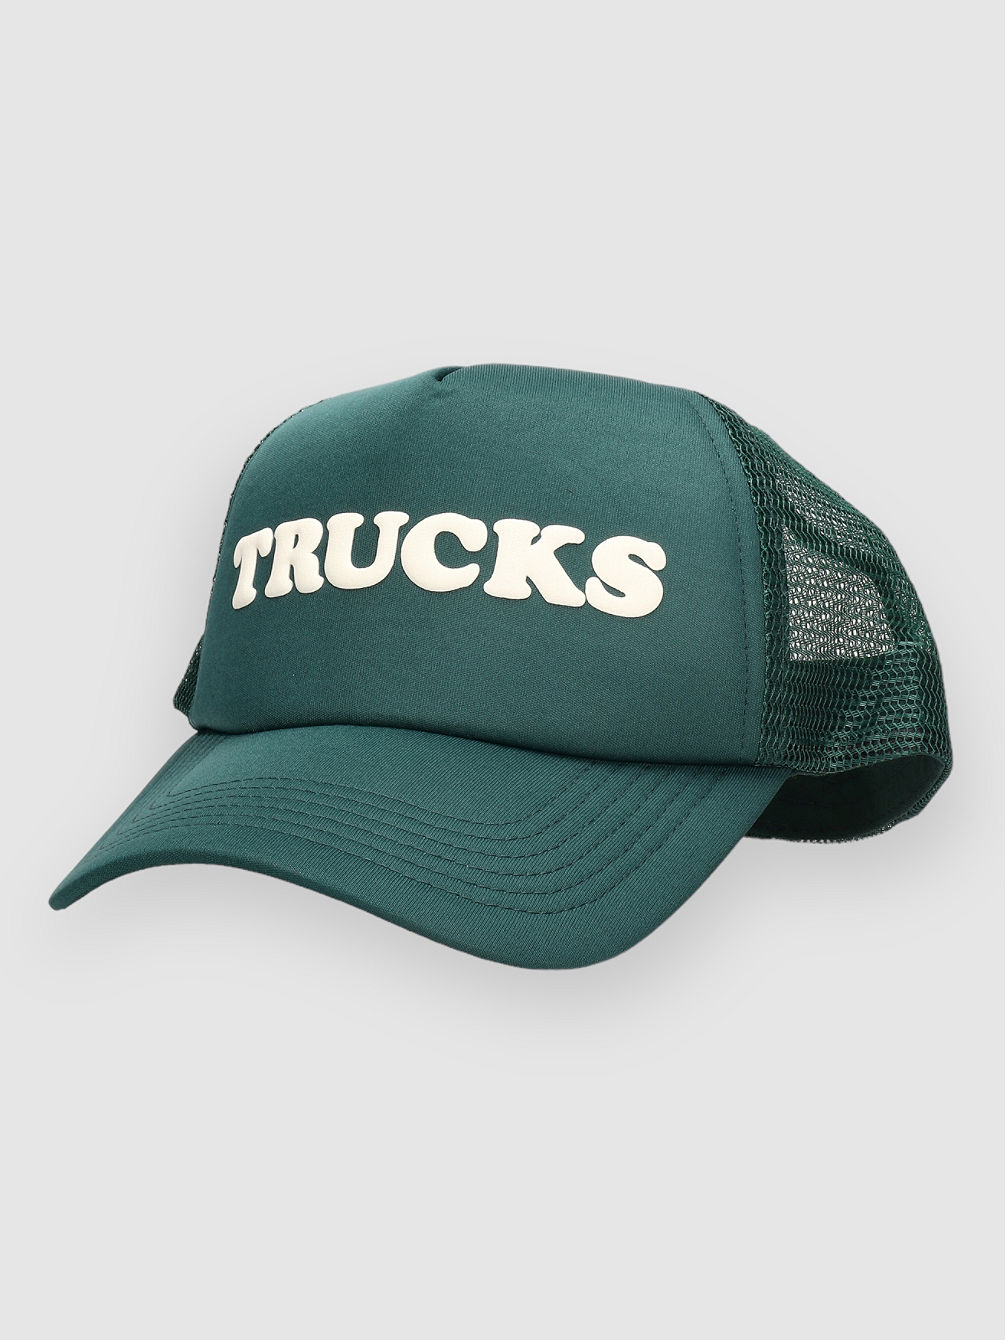 Trucks Trucker Bon&eacute;